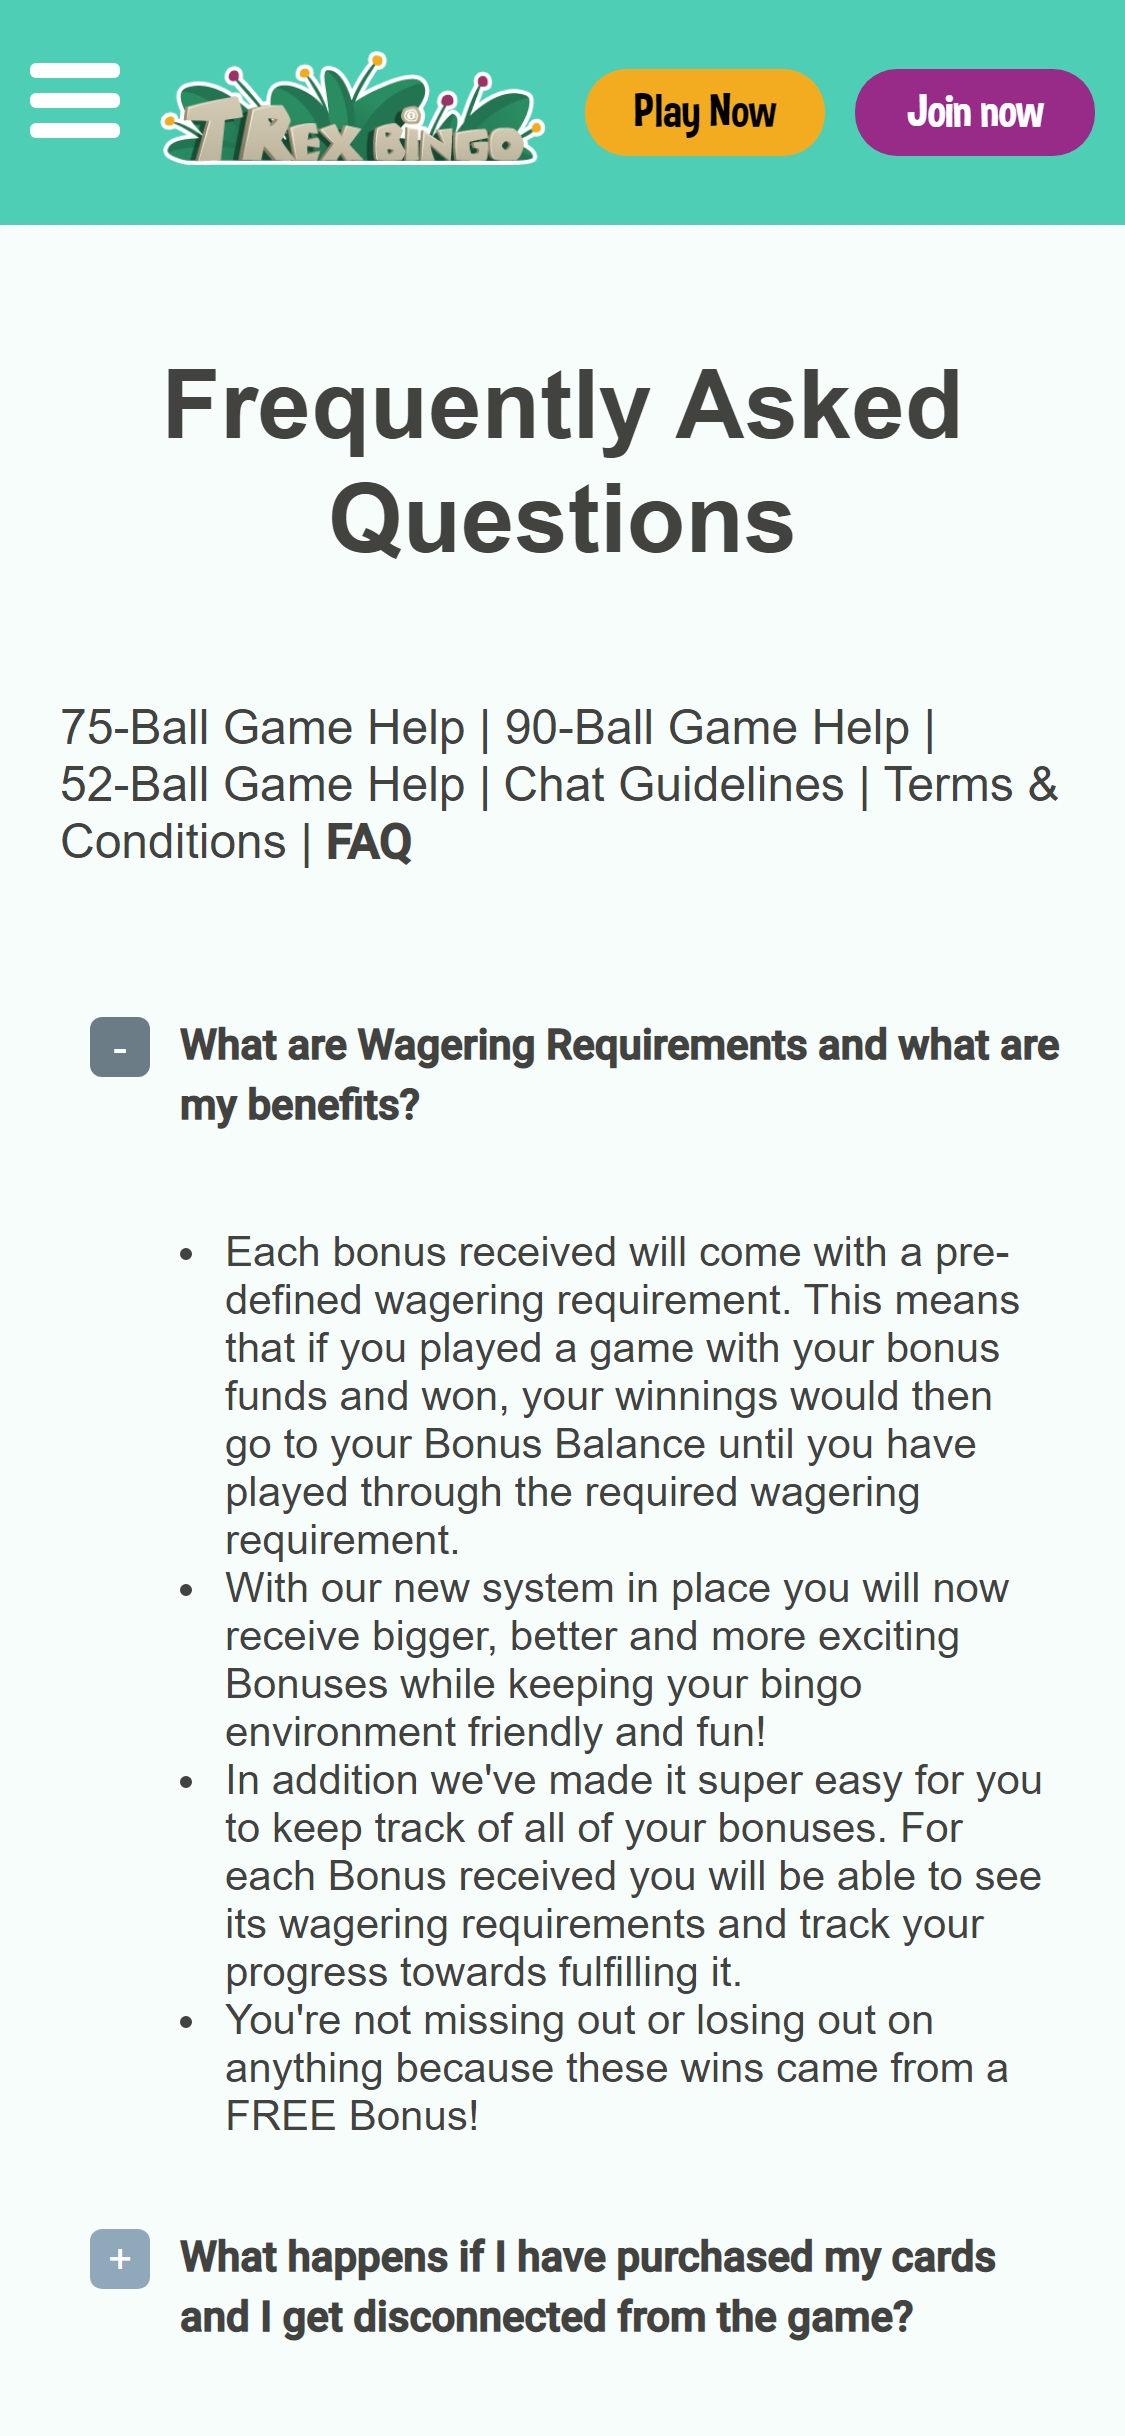 T-Rex Bingo Casino Mobile Support Review